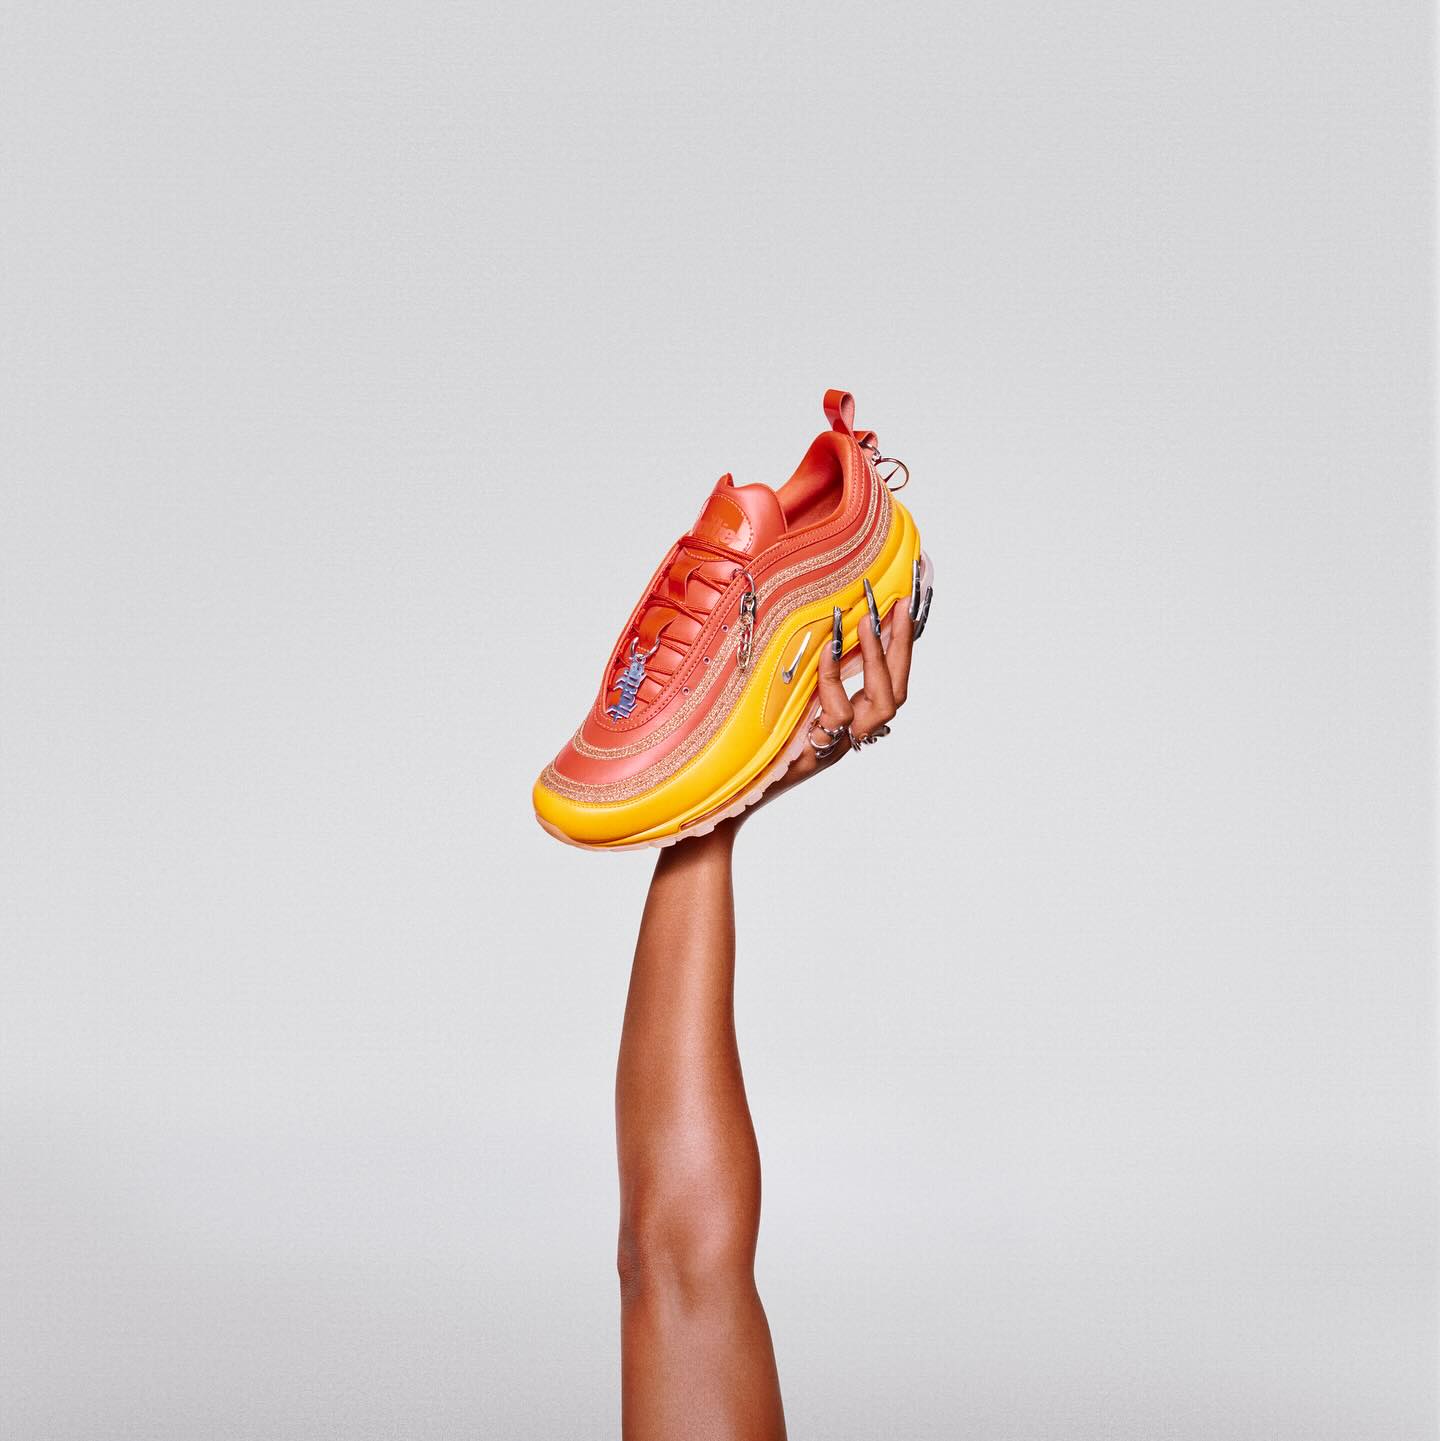 Nike Nike Pro Megan Thee Stallion Flame Print 5 Inch legging Shorts in Red